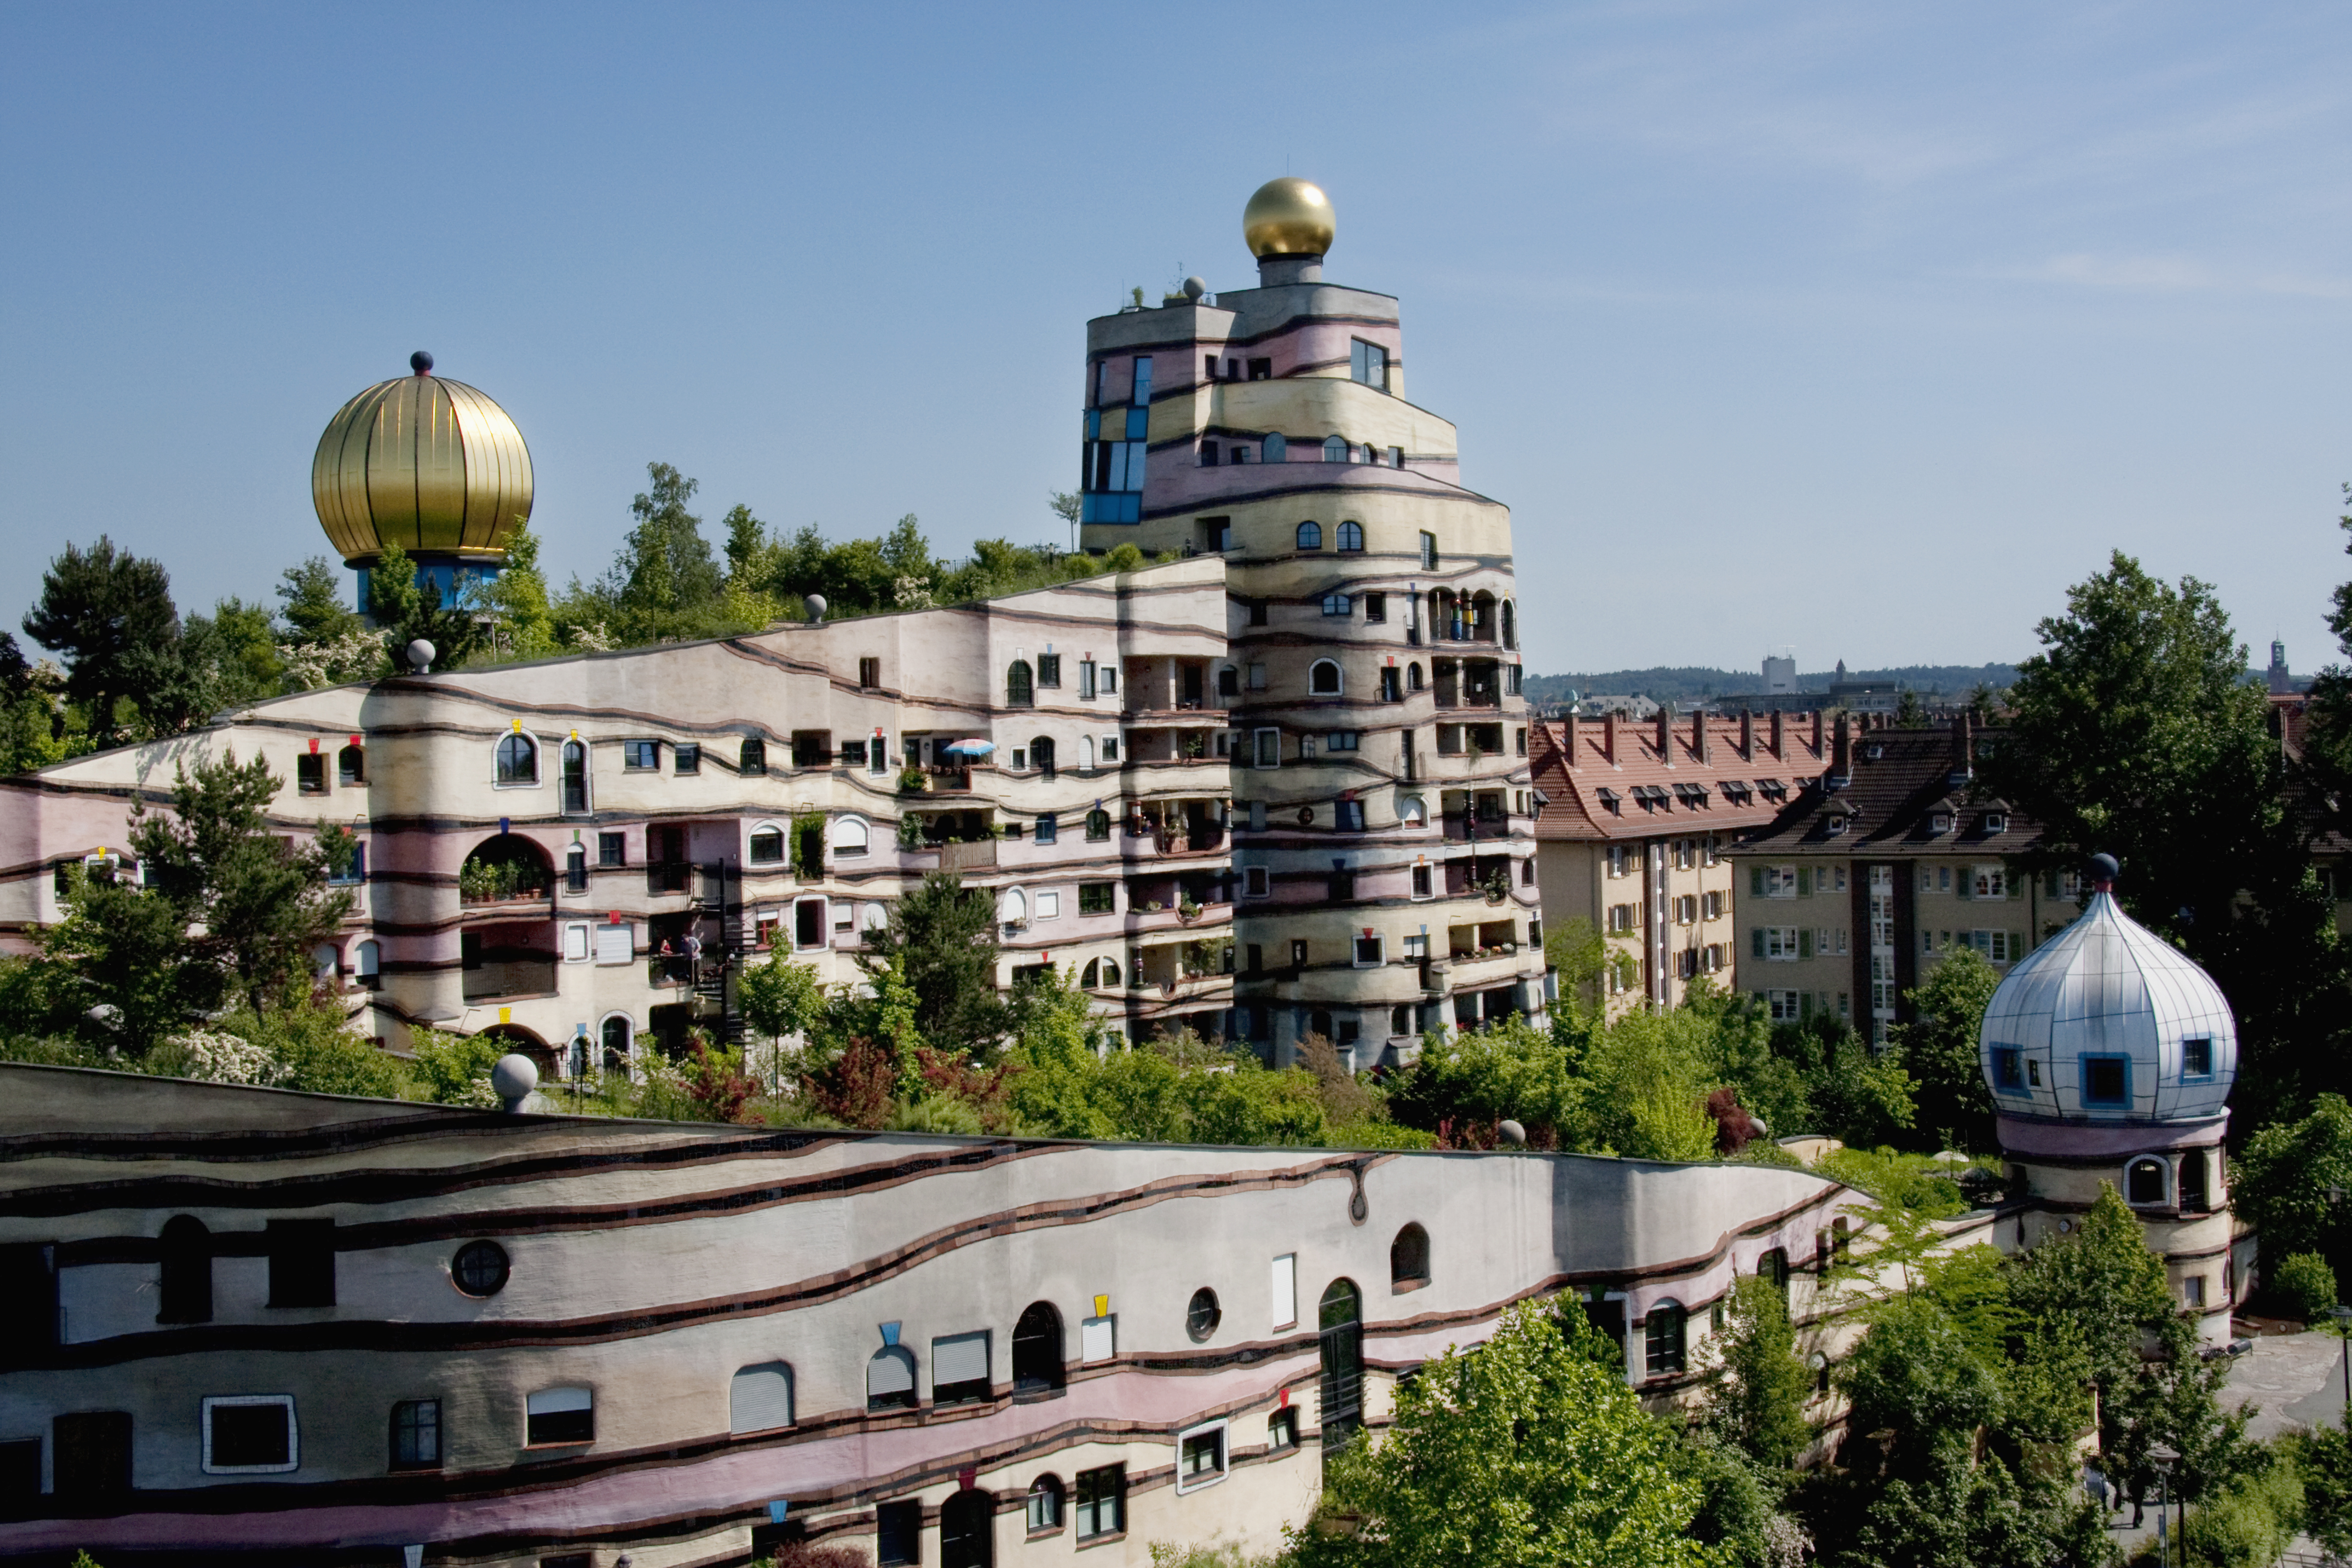 Forest Spiral (Hundertwasser Building) — Darmstadt, Germany | Source: Getty Images